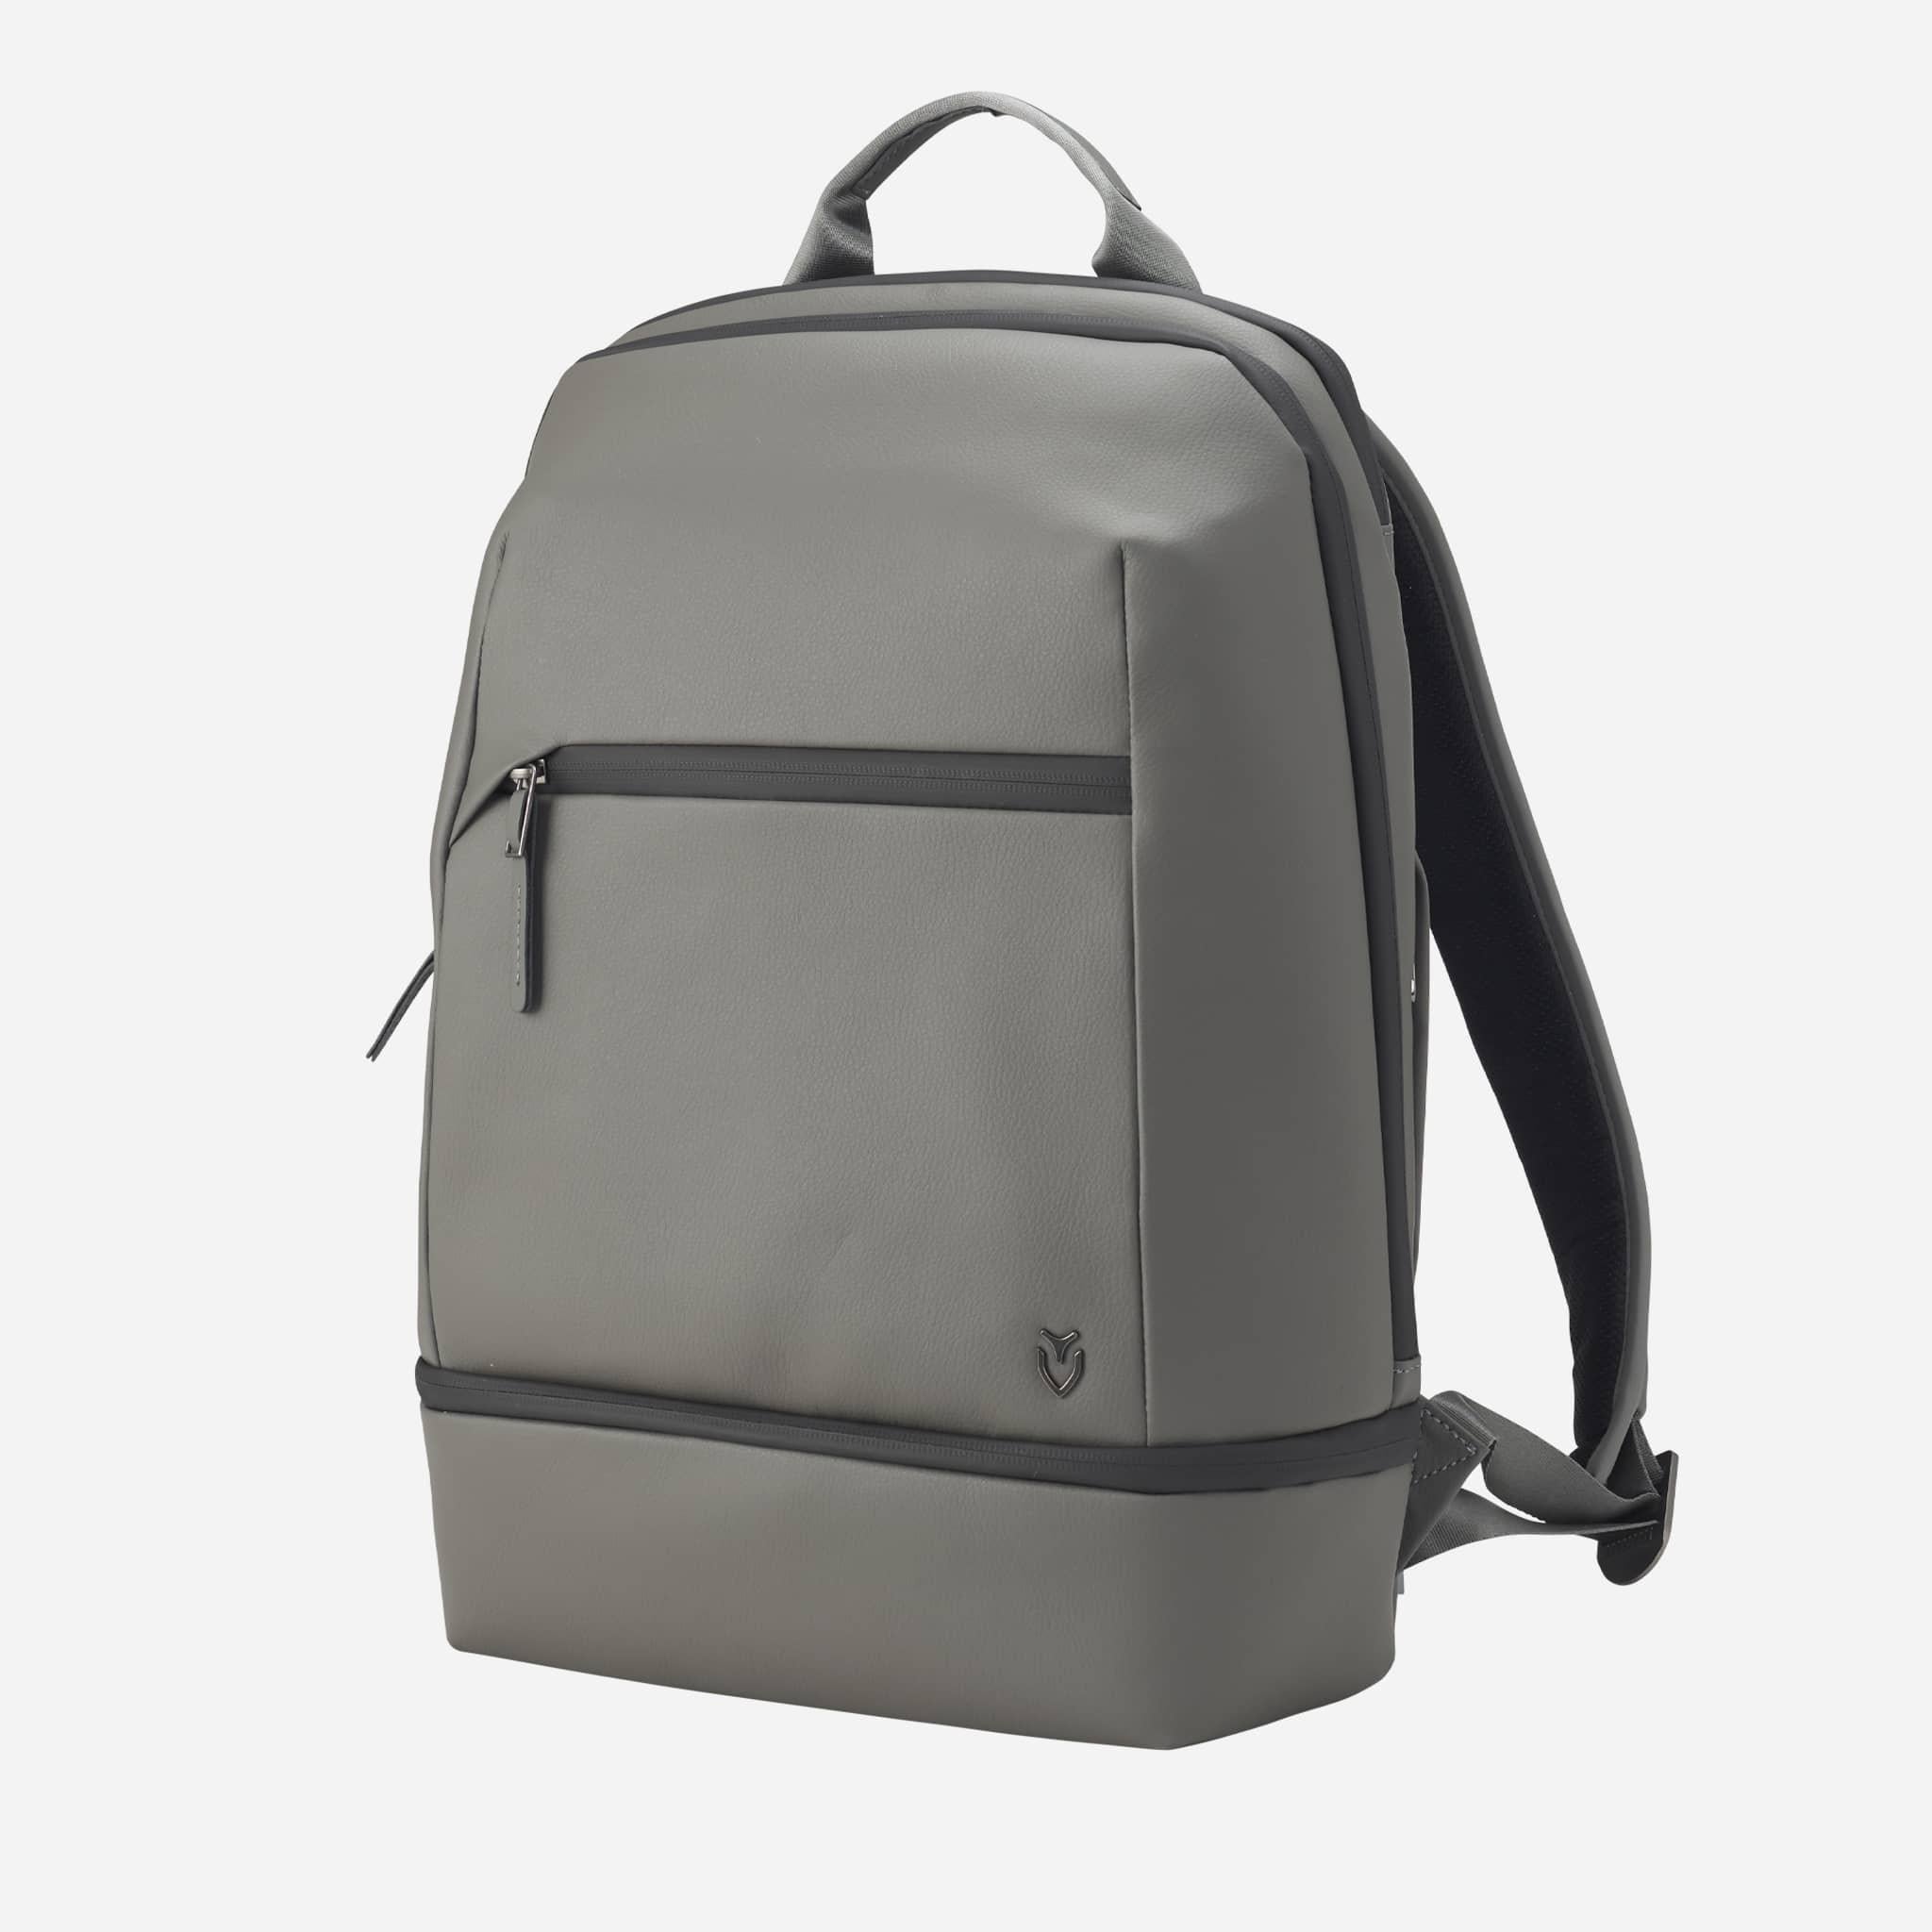 Louis Quatorze backpack  Bags, Man bag, Minimal backpack